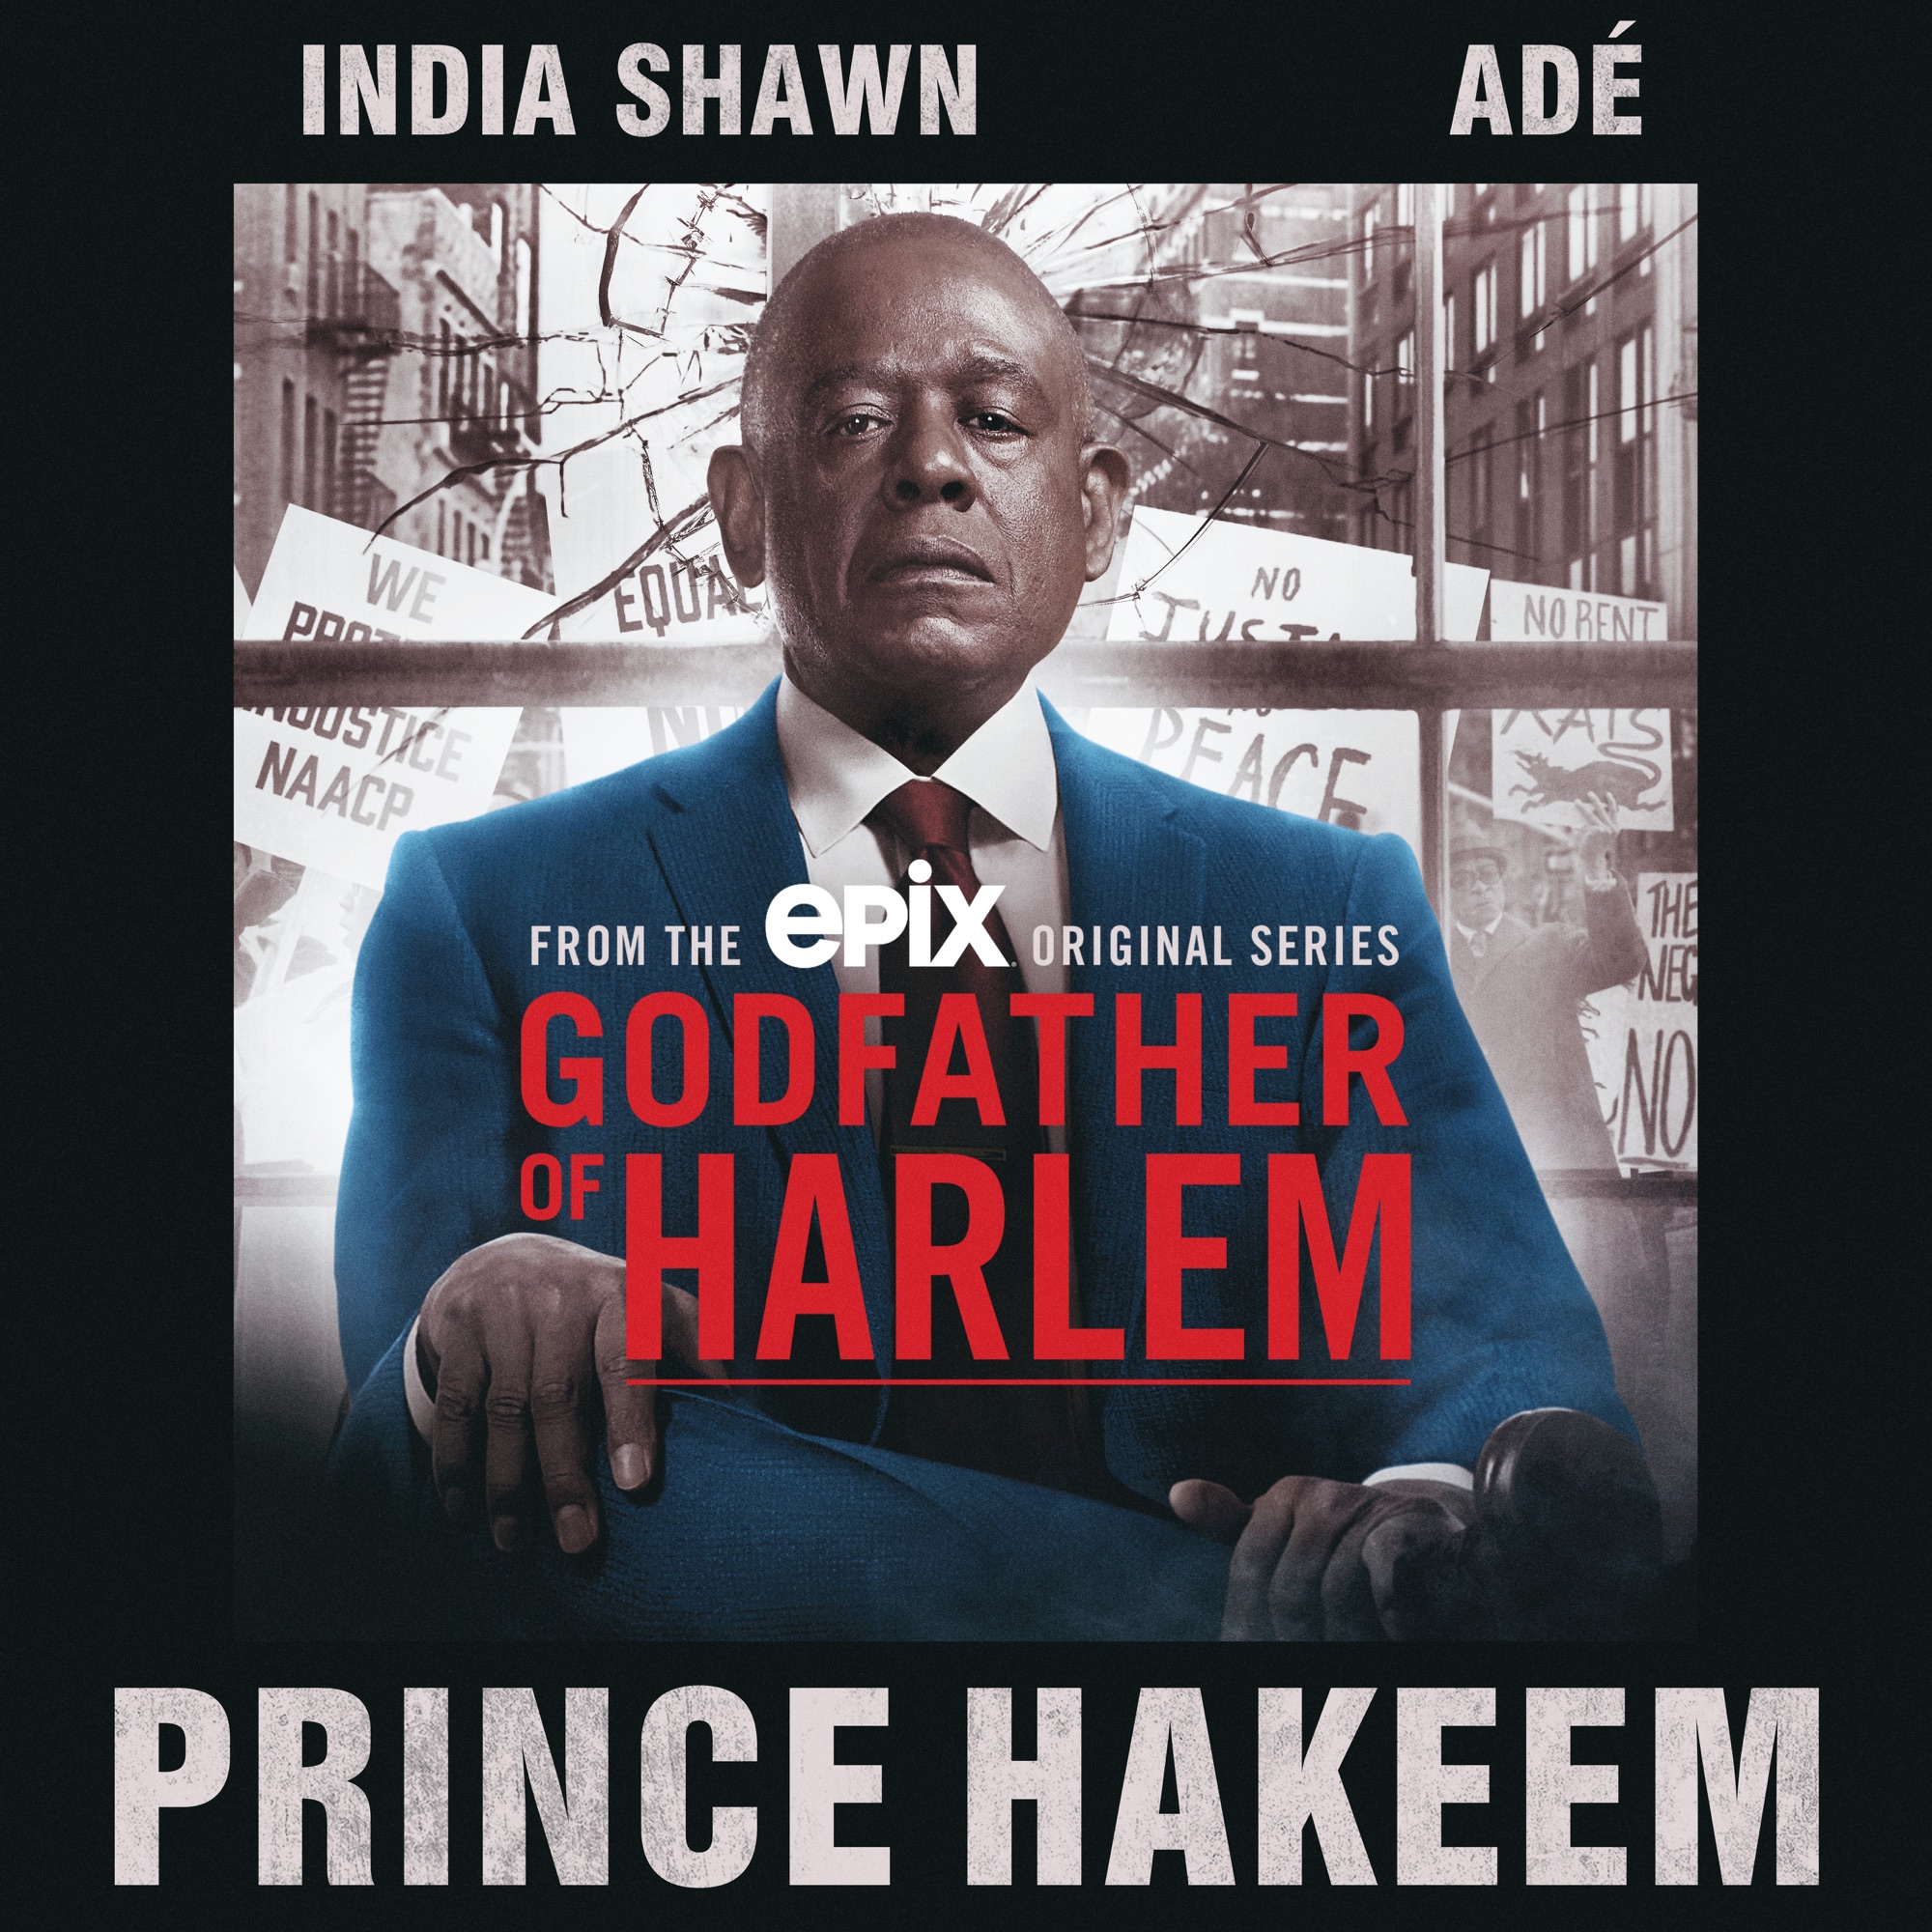 Godfather of Harlem - Prince Hakeem (feat. India Shawn & ADÉ) - Single